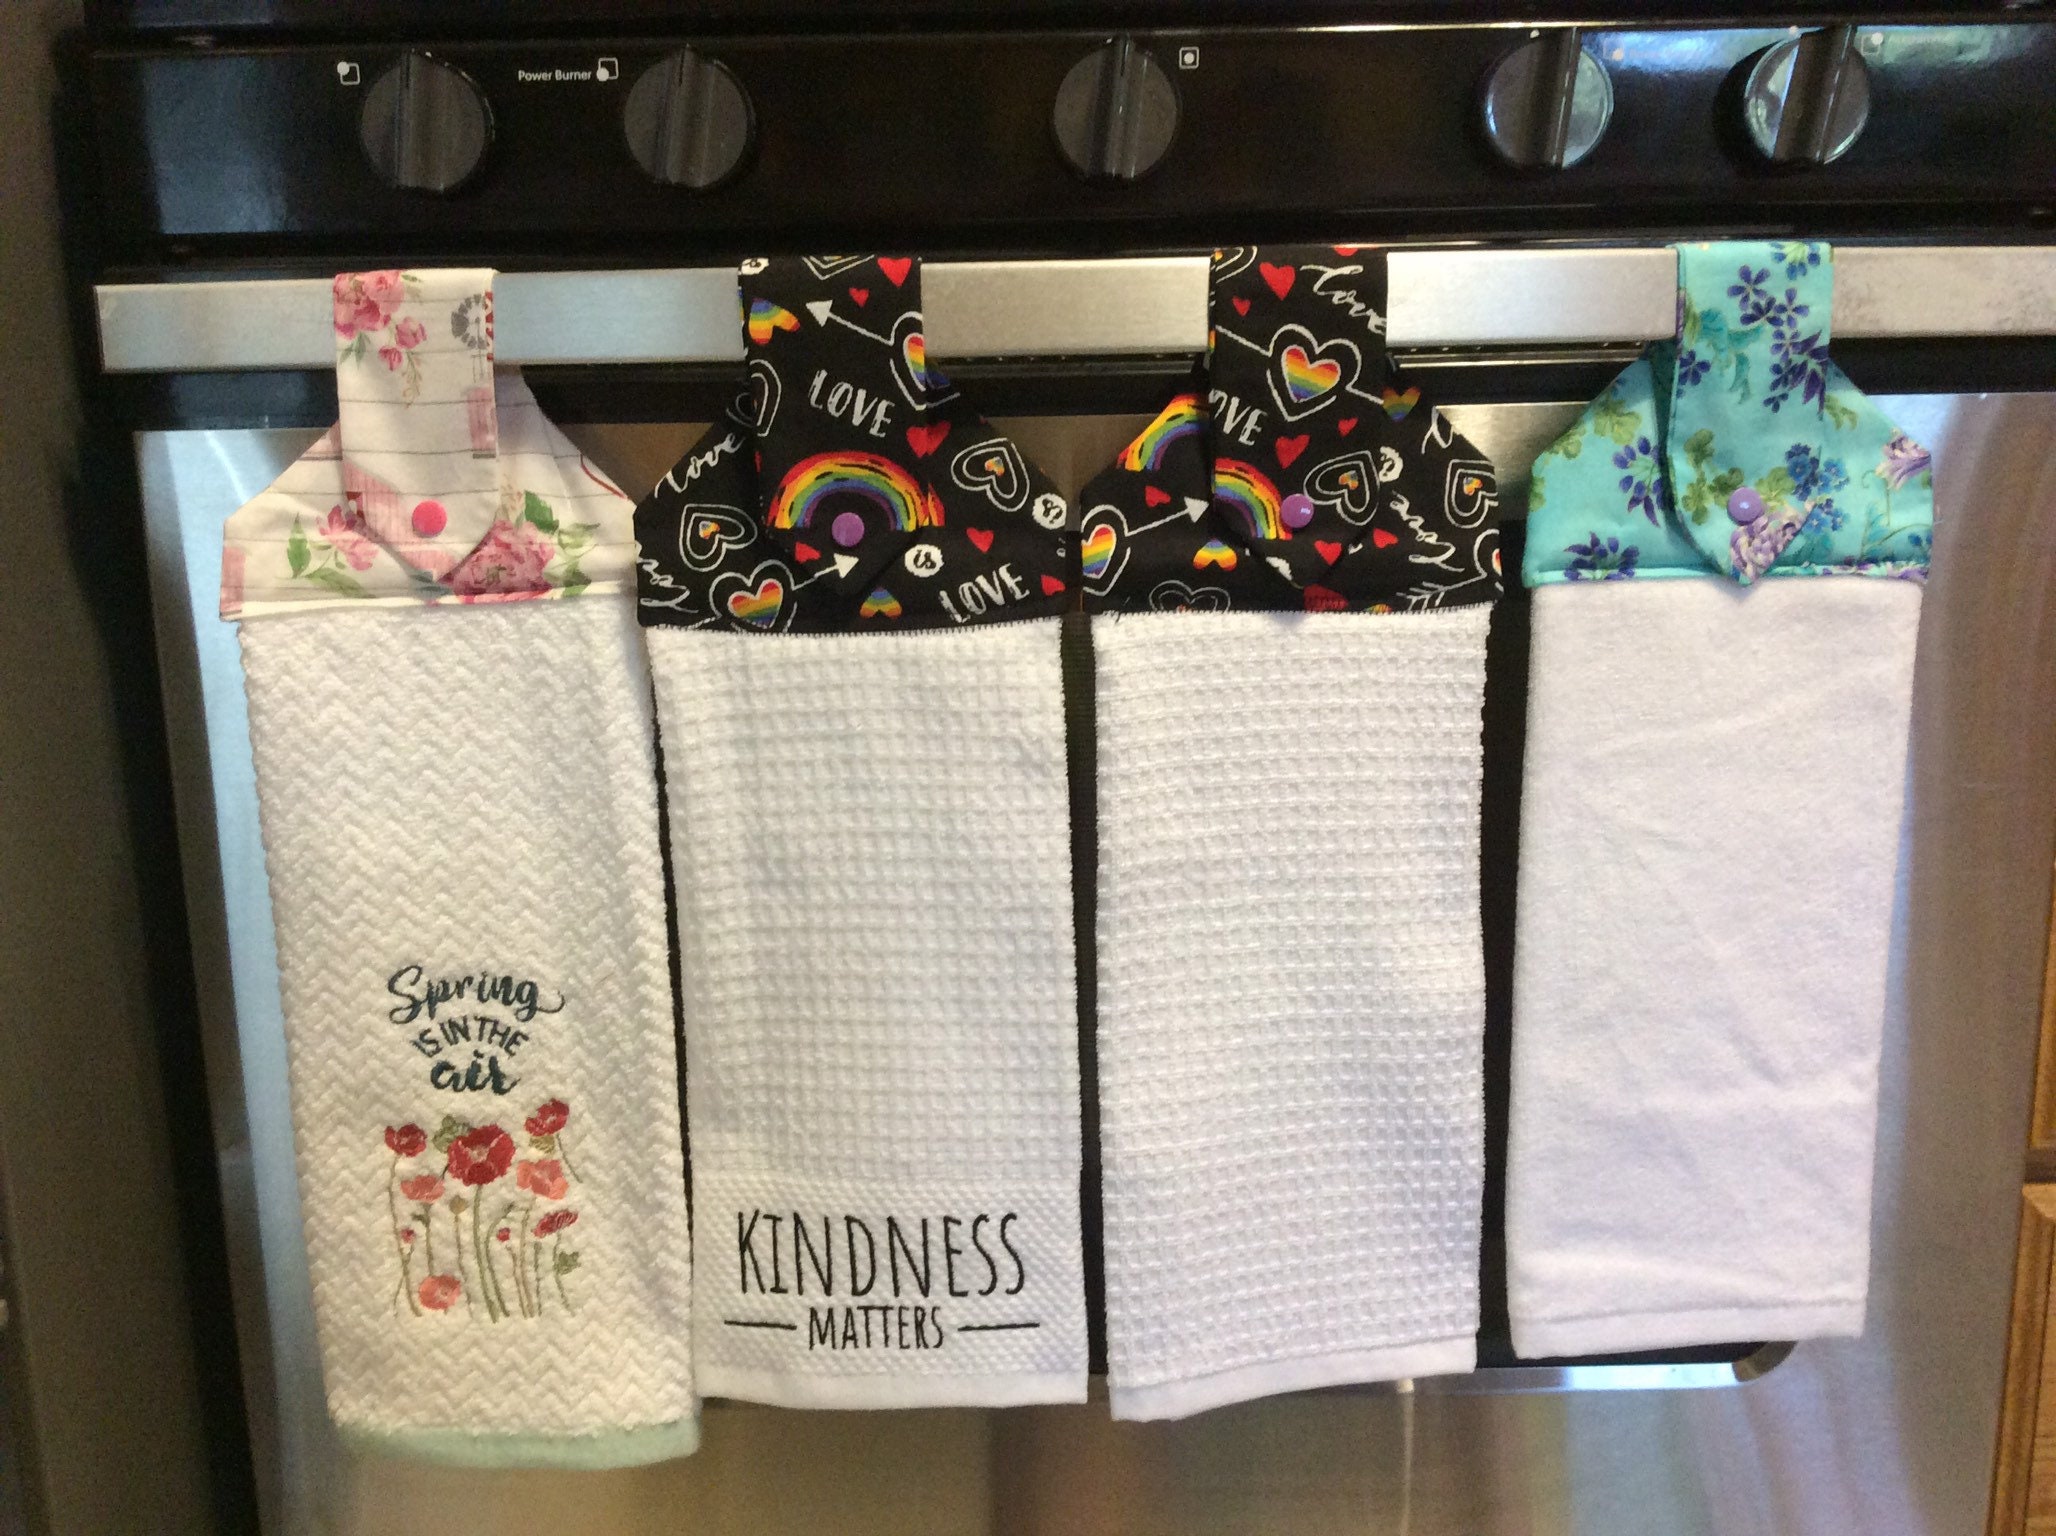 Hanging Kitchen Towel Hack (Spring Pinterest Challenge) 